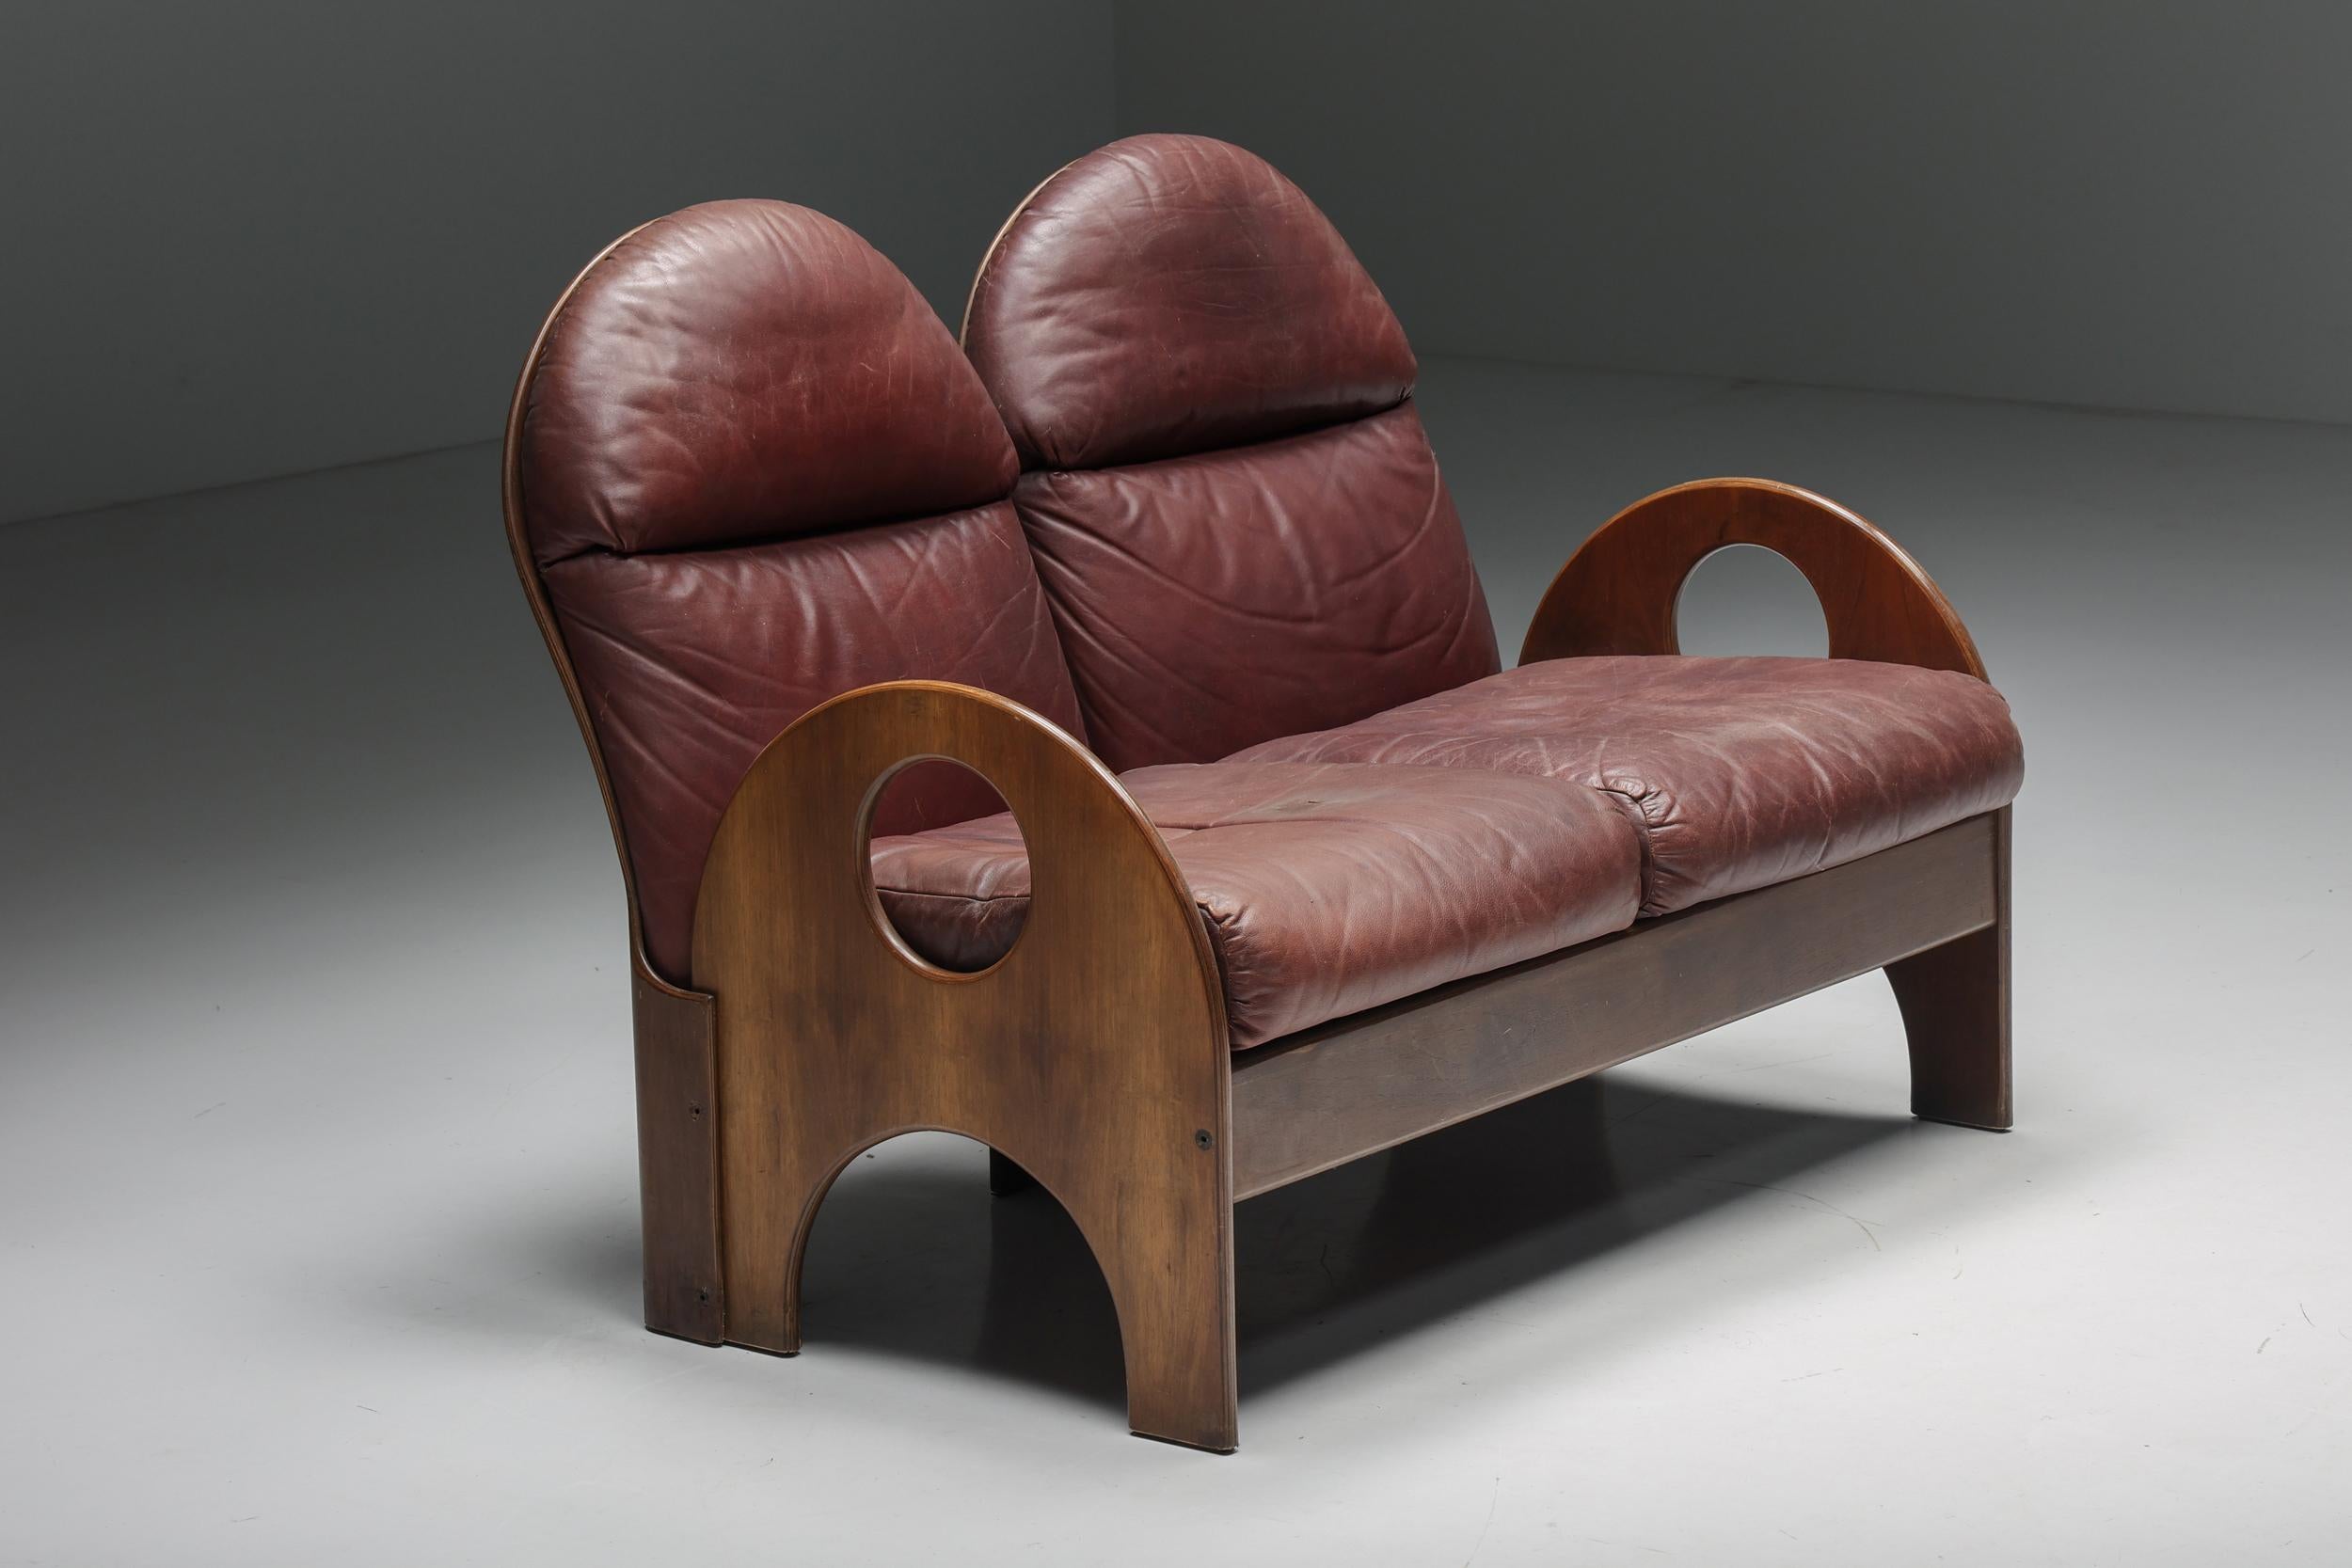 Gae Aulenti; Love Seat; Two-Seater; Arcata; Poltronova; Italian Design; Italy; 1968; Walnut; Burgundy Leather; Mid-Century Modern;

Love Seat Arcata by Gae Aulenti, walnut and burgundy leather, 1968.

This two-seater 'Arcata' sofa is designed by